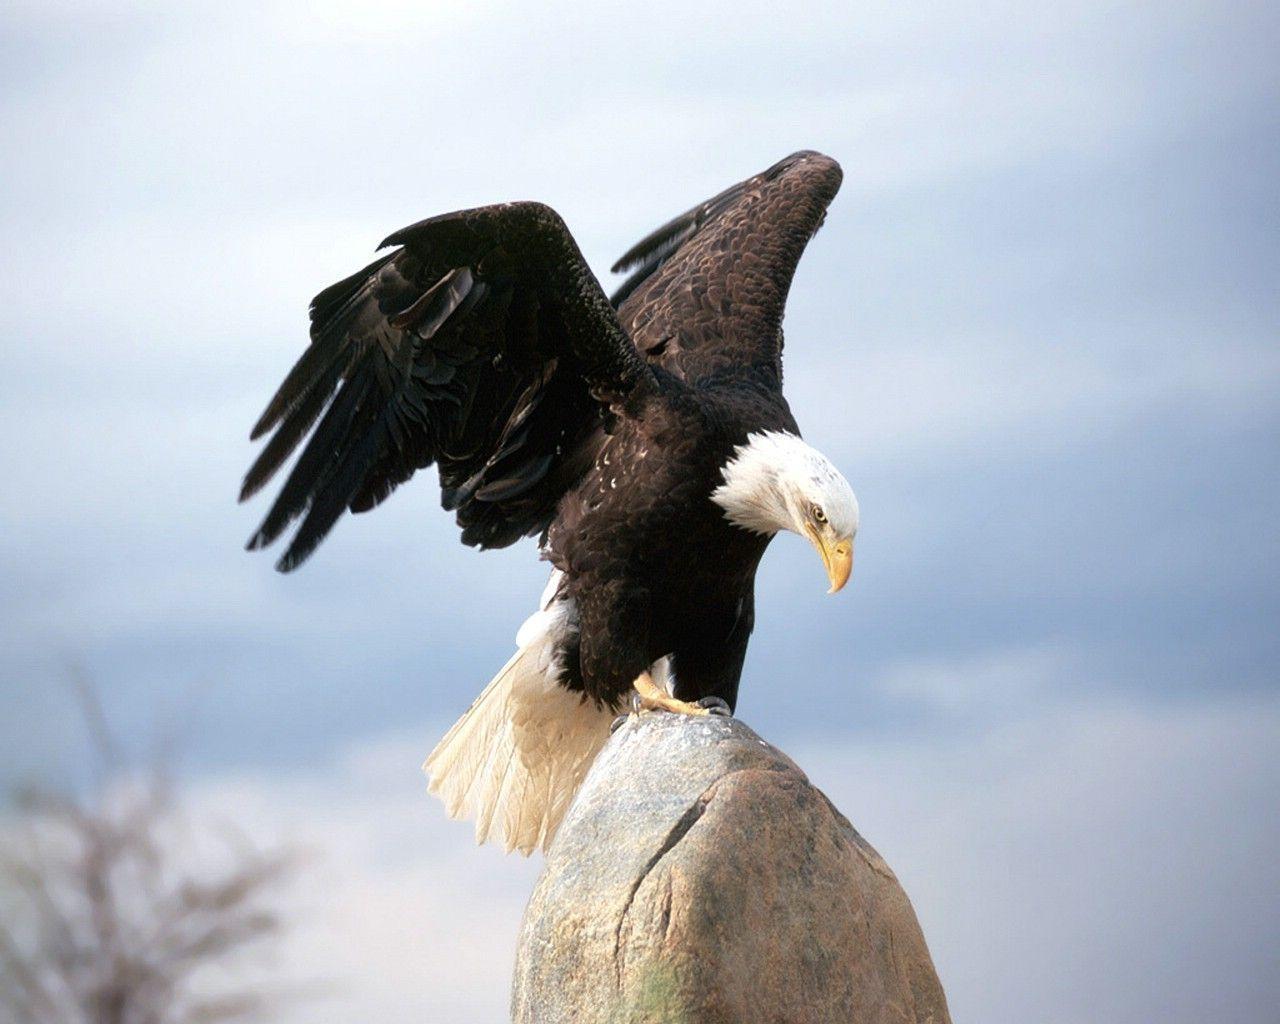 Bald eagle Photo. New image. HD new image